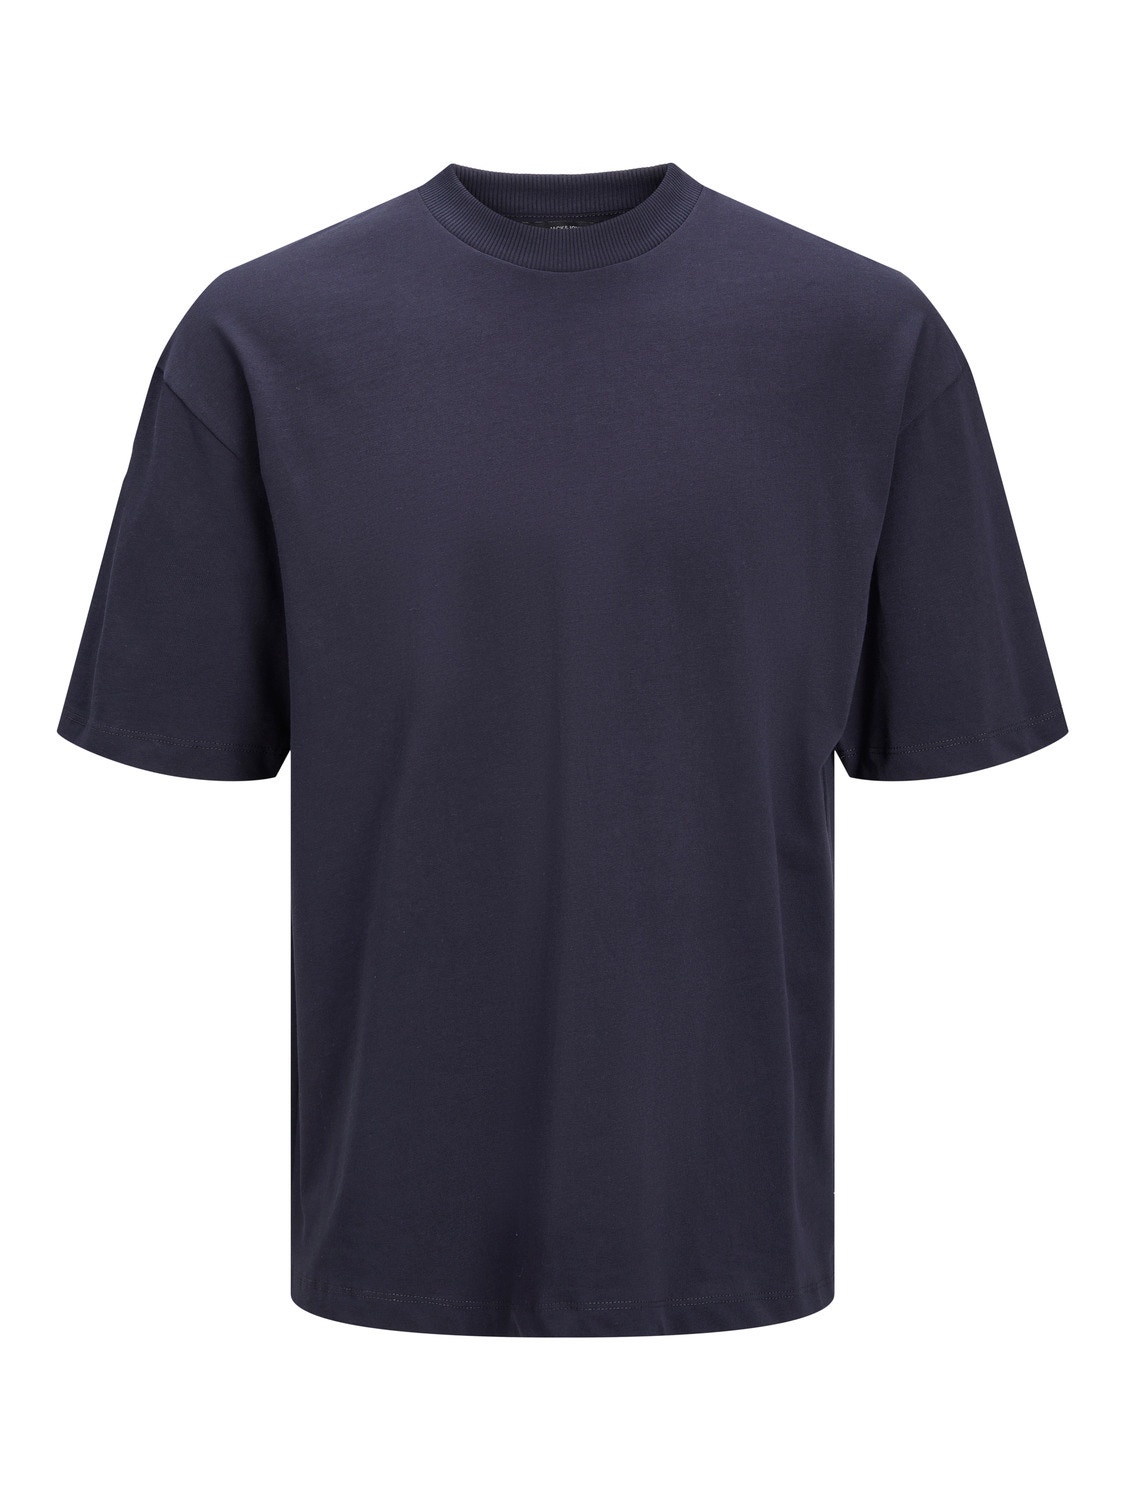 Jack & Jones Plain Crew neck T-shirt -Perfect Navy - 12204679